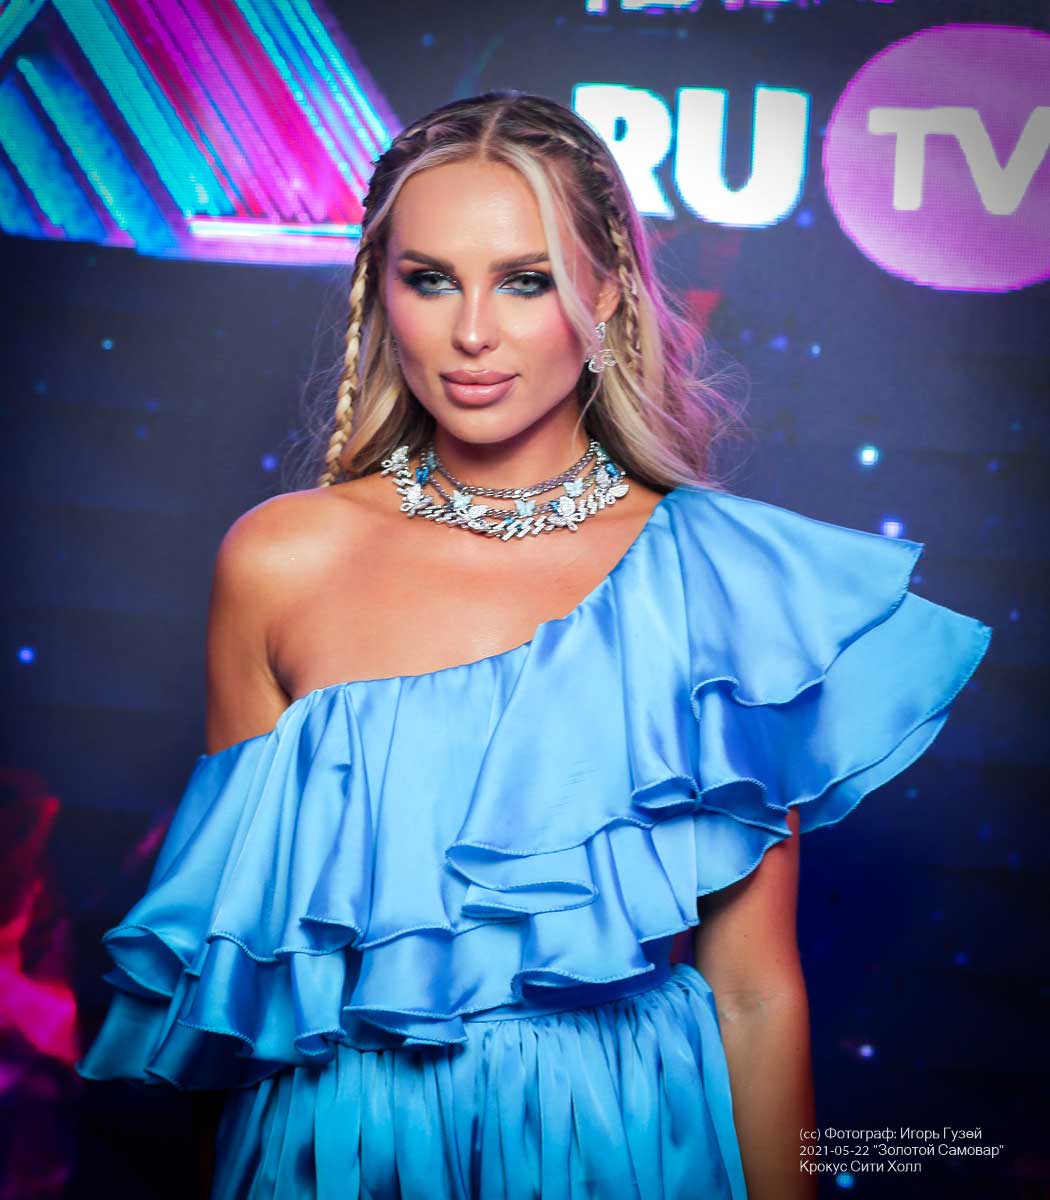 Ханна - Золотой Самовар 2021 - премия RU.TV (Москва, Крокус Сити Холл) 2021-05-22 19:16:53